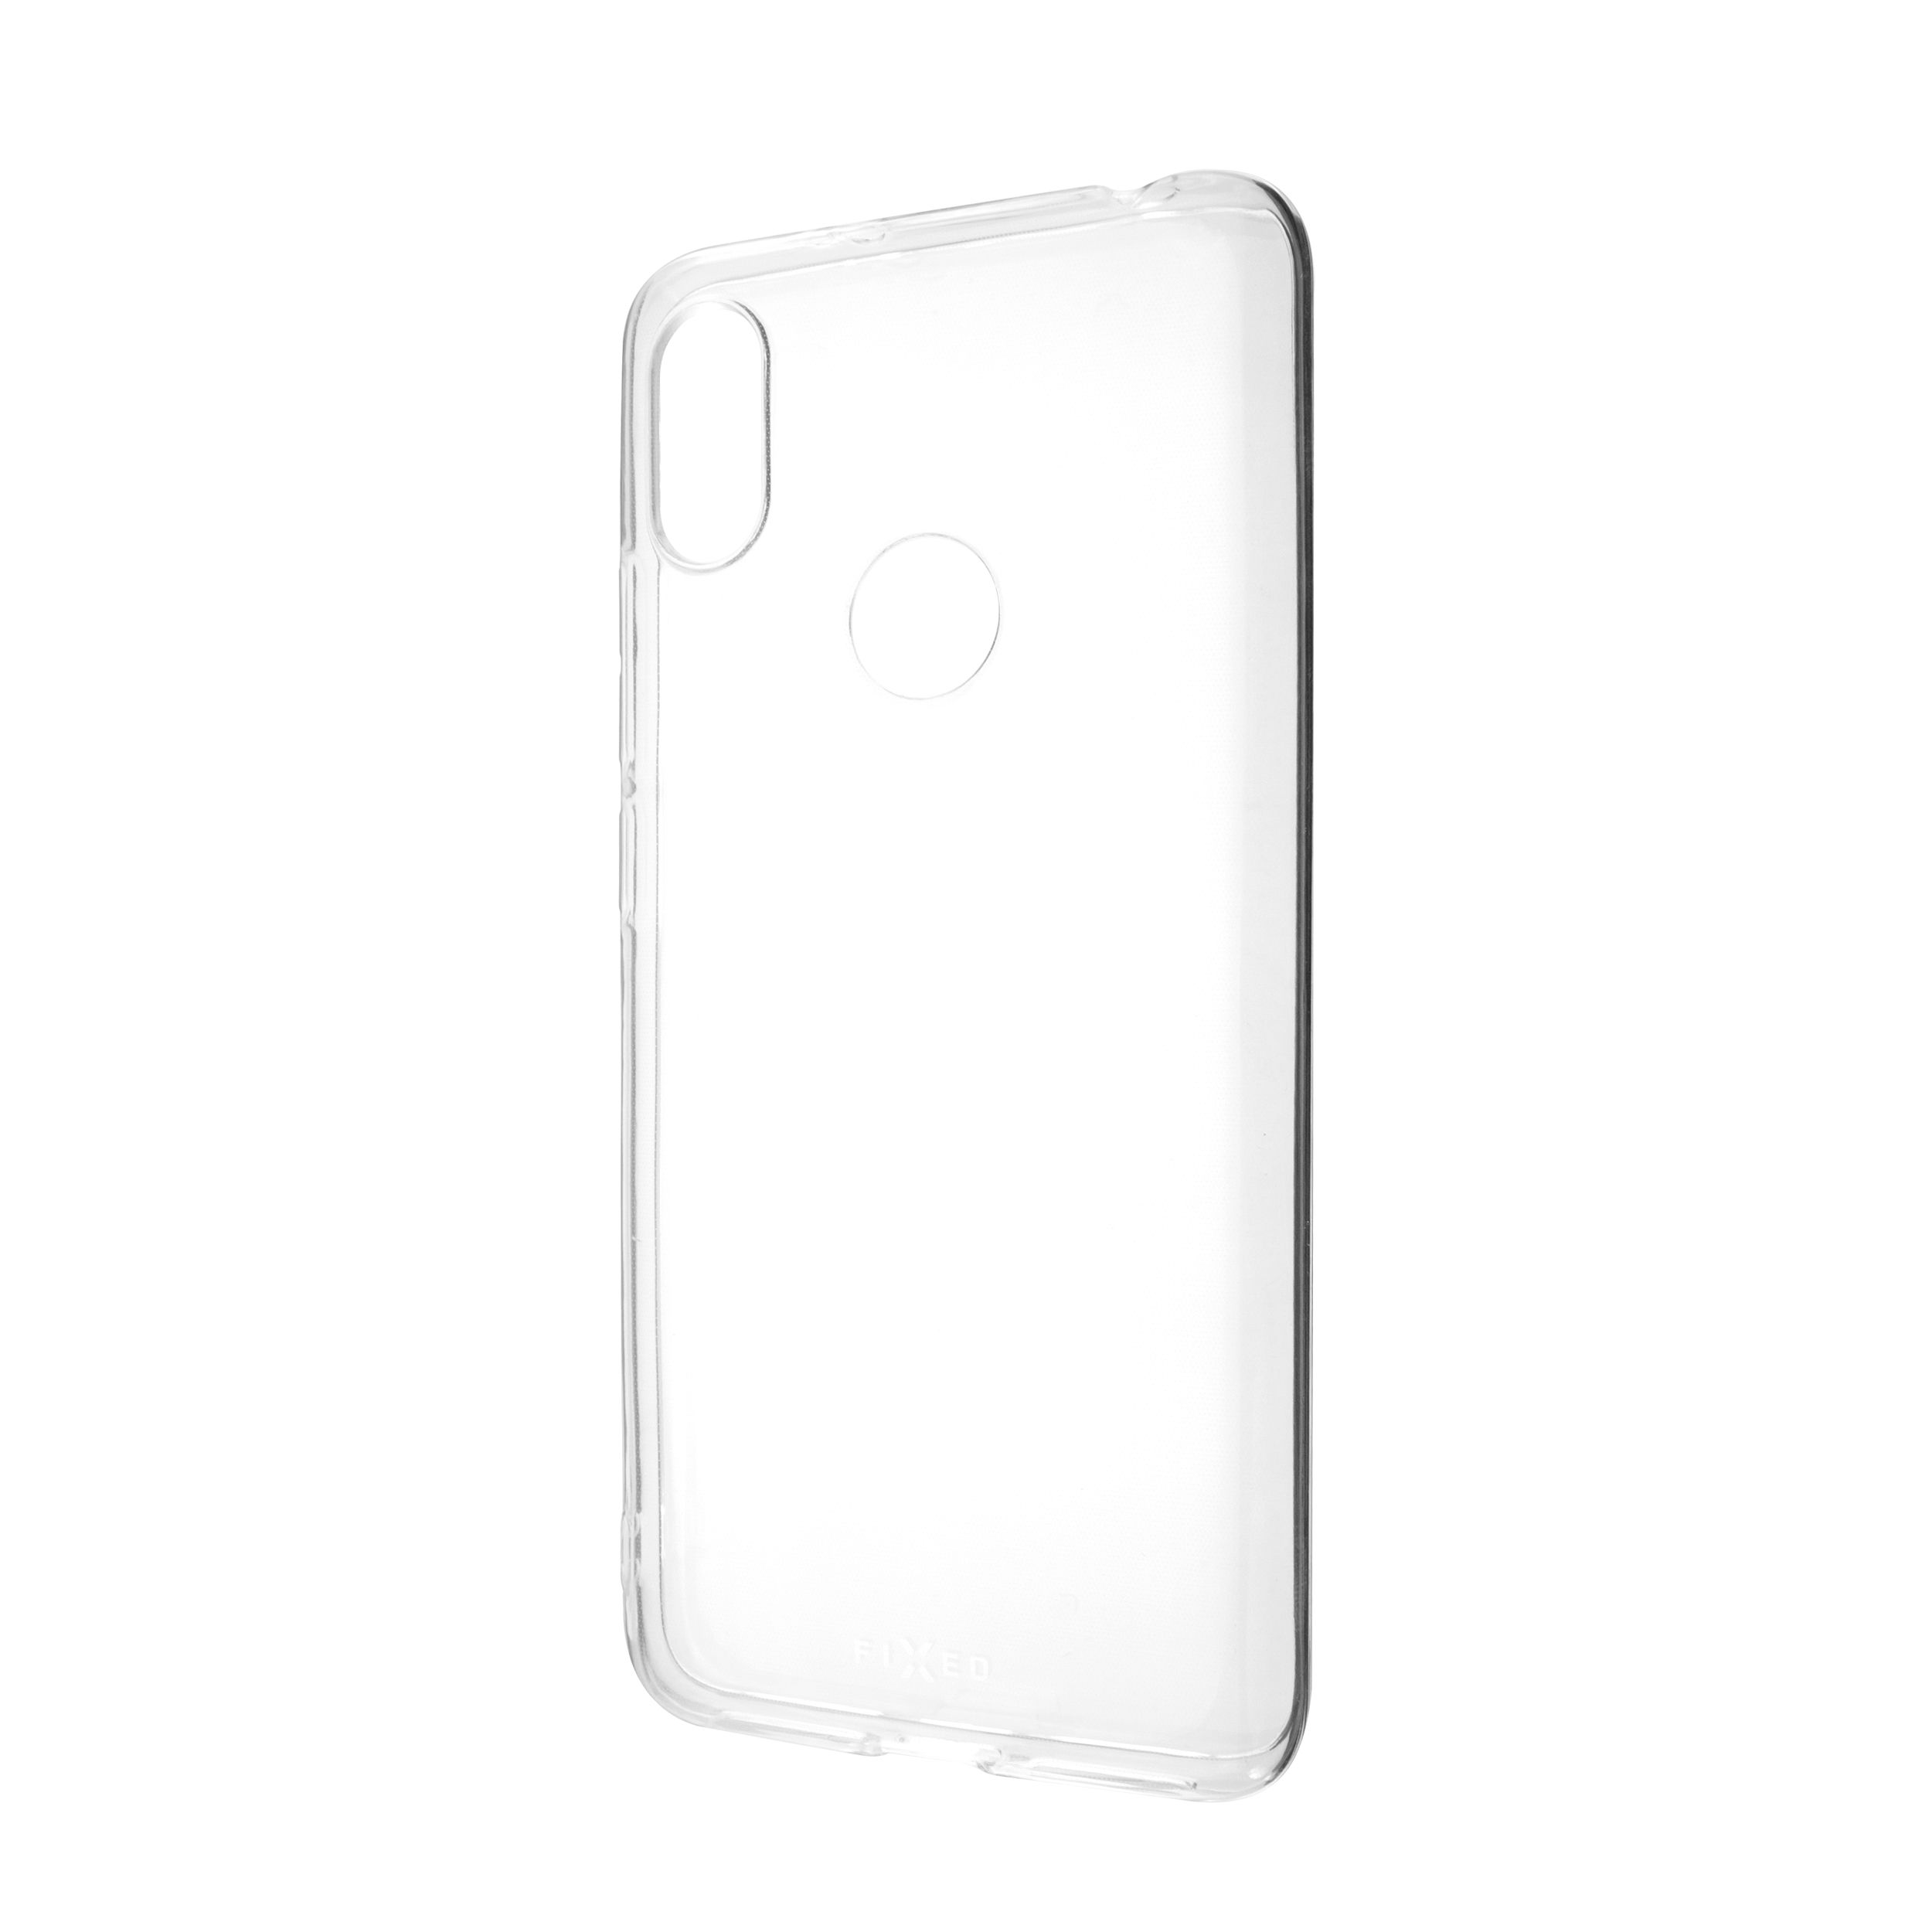 TPU gelové pouzdro pro Xiaomi Redmi S2, čiré